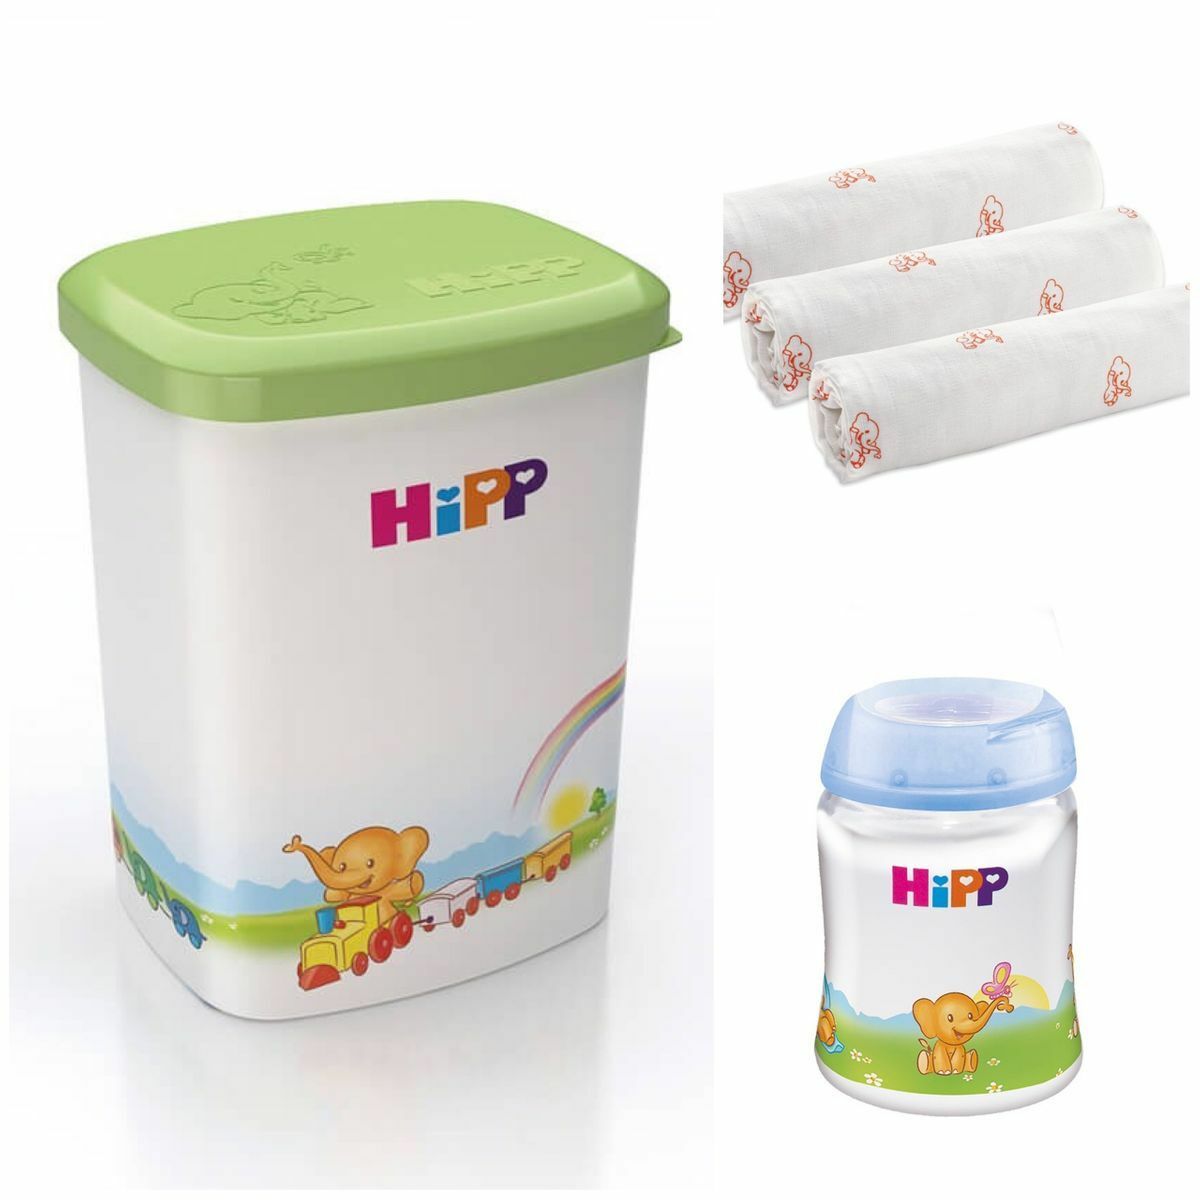 Hipp Formula Powder Milk Storage Box Container